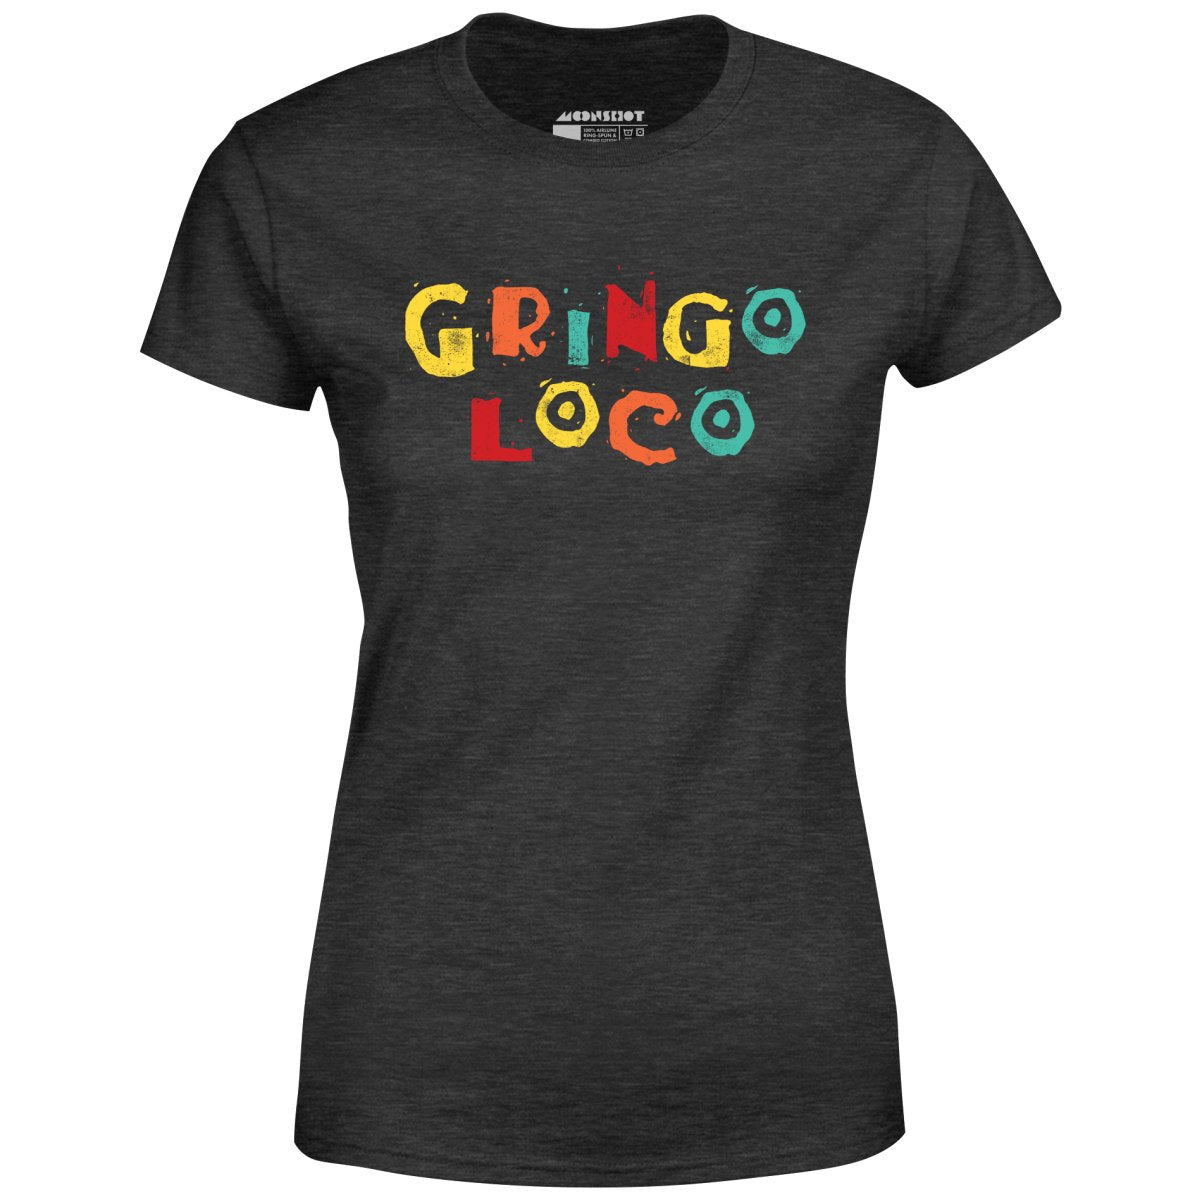 Gringo Loco - Women's T-Shirt